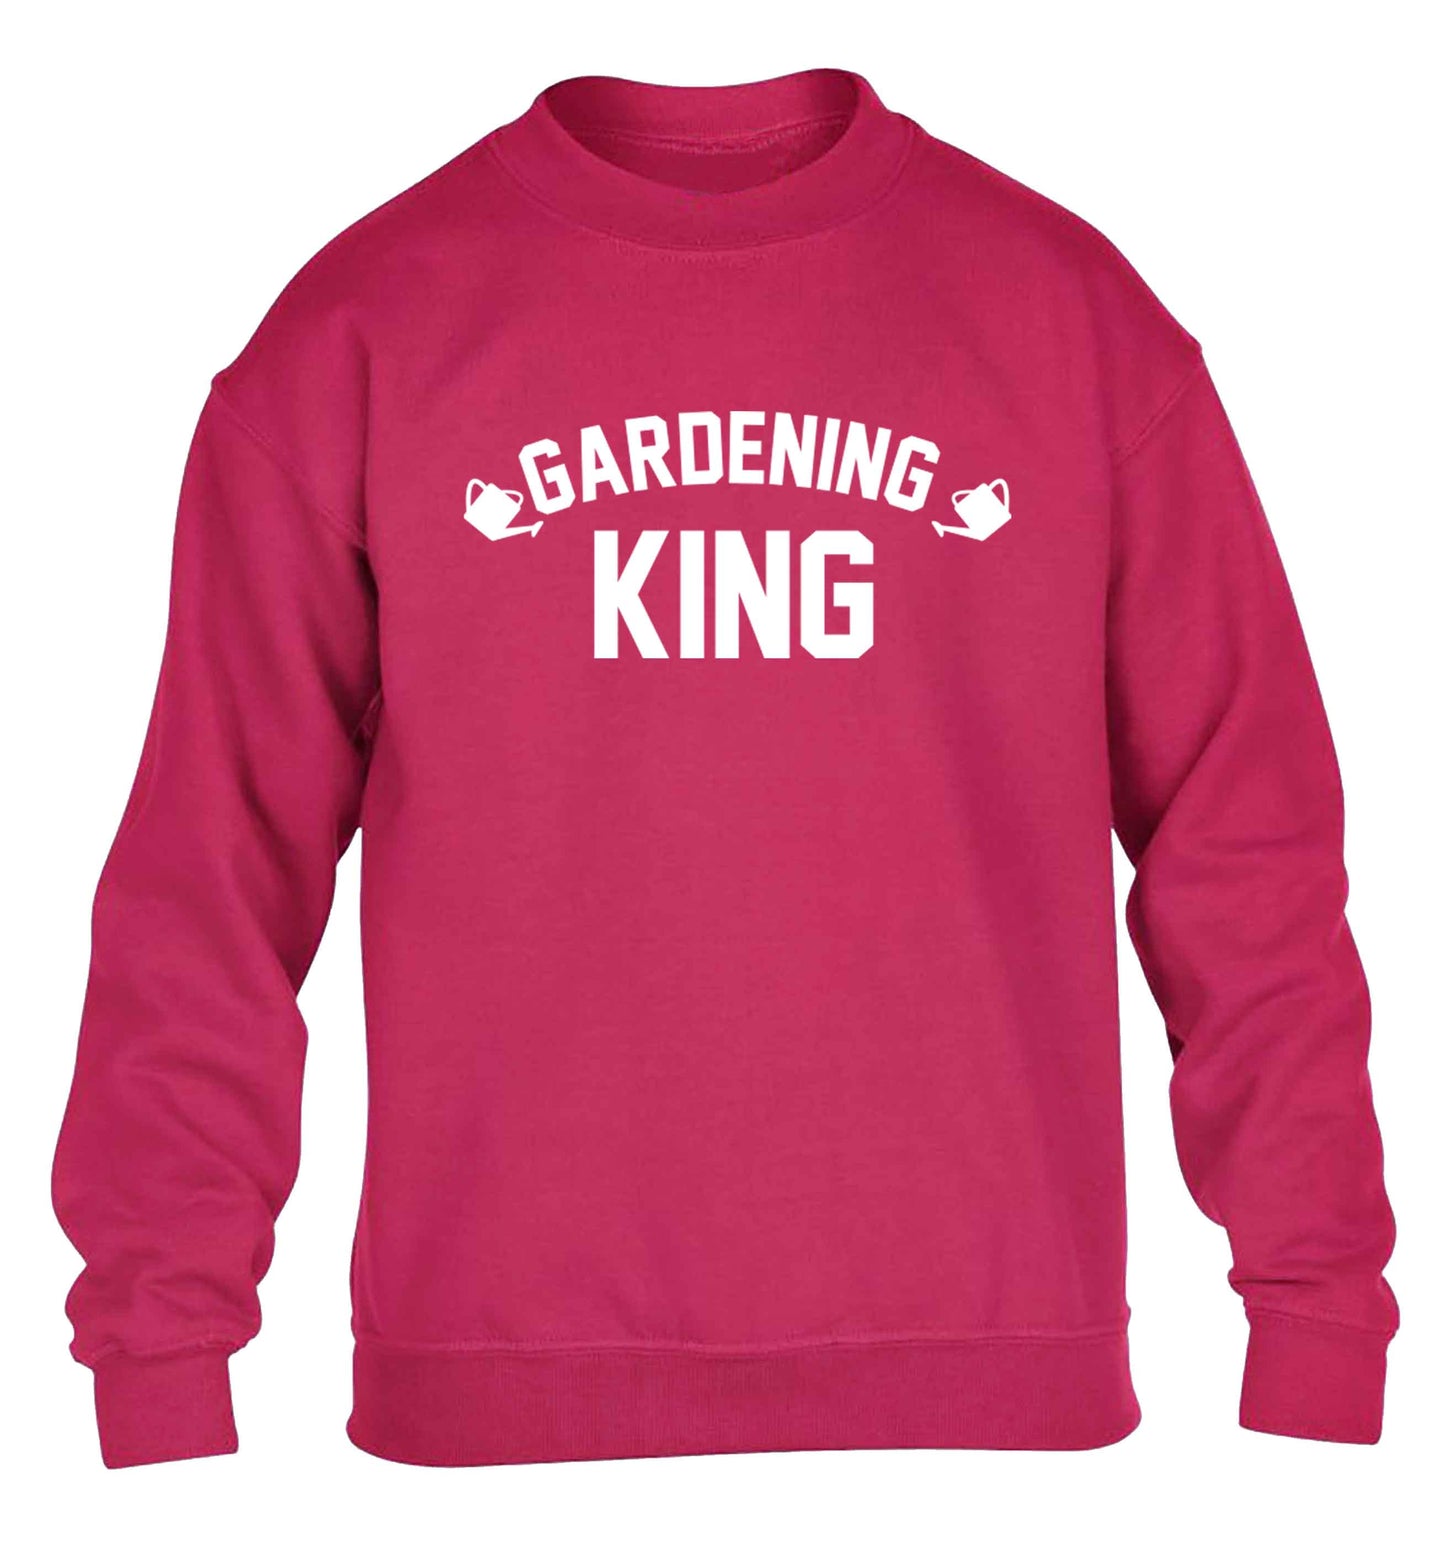 Gardening king children's pink sweater 12-13 Years